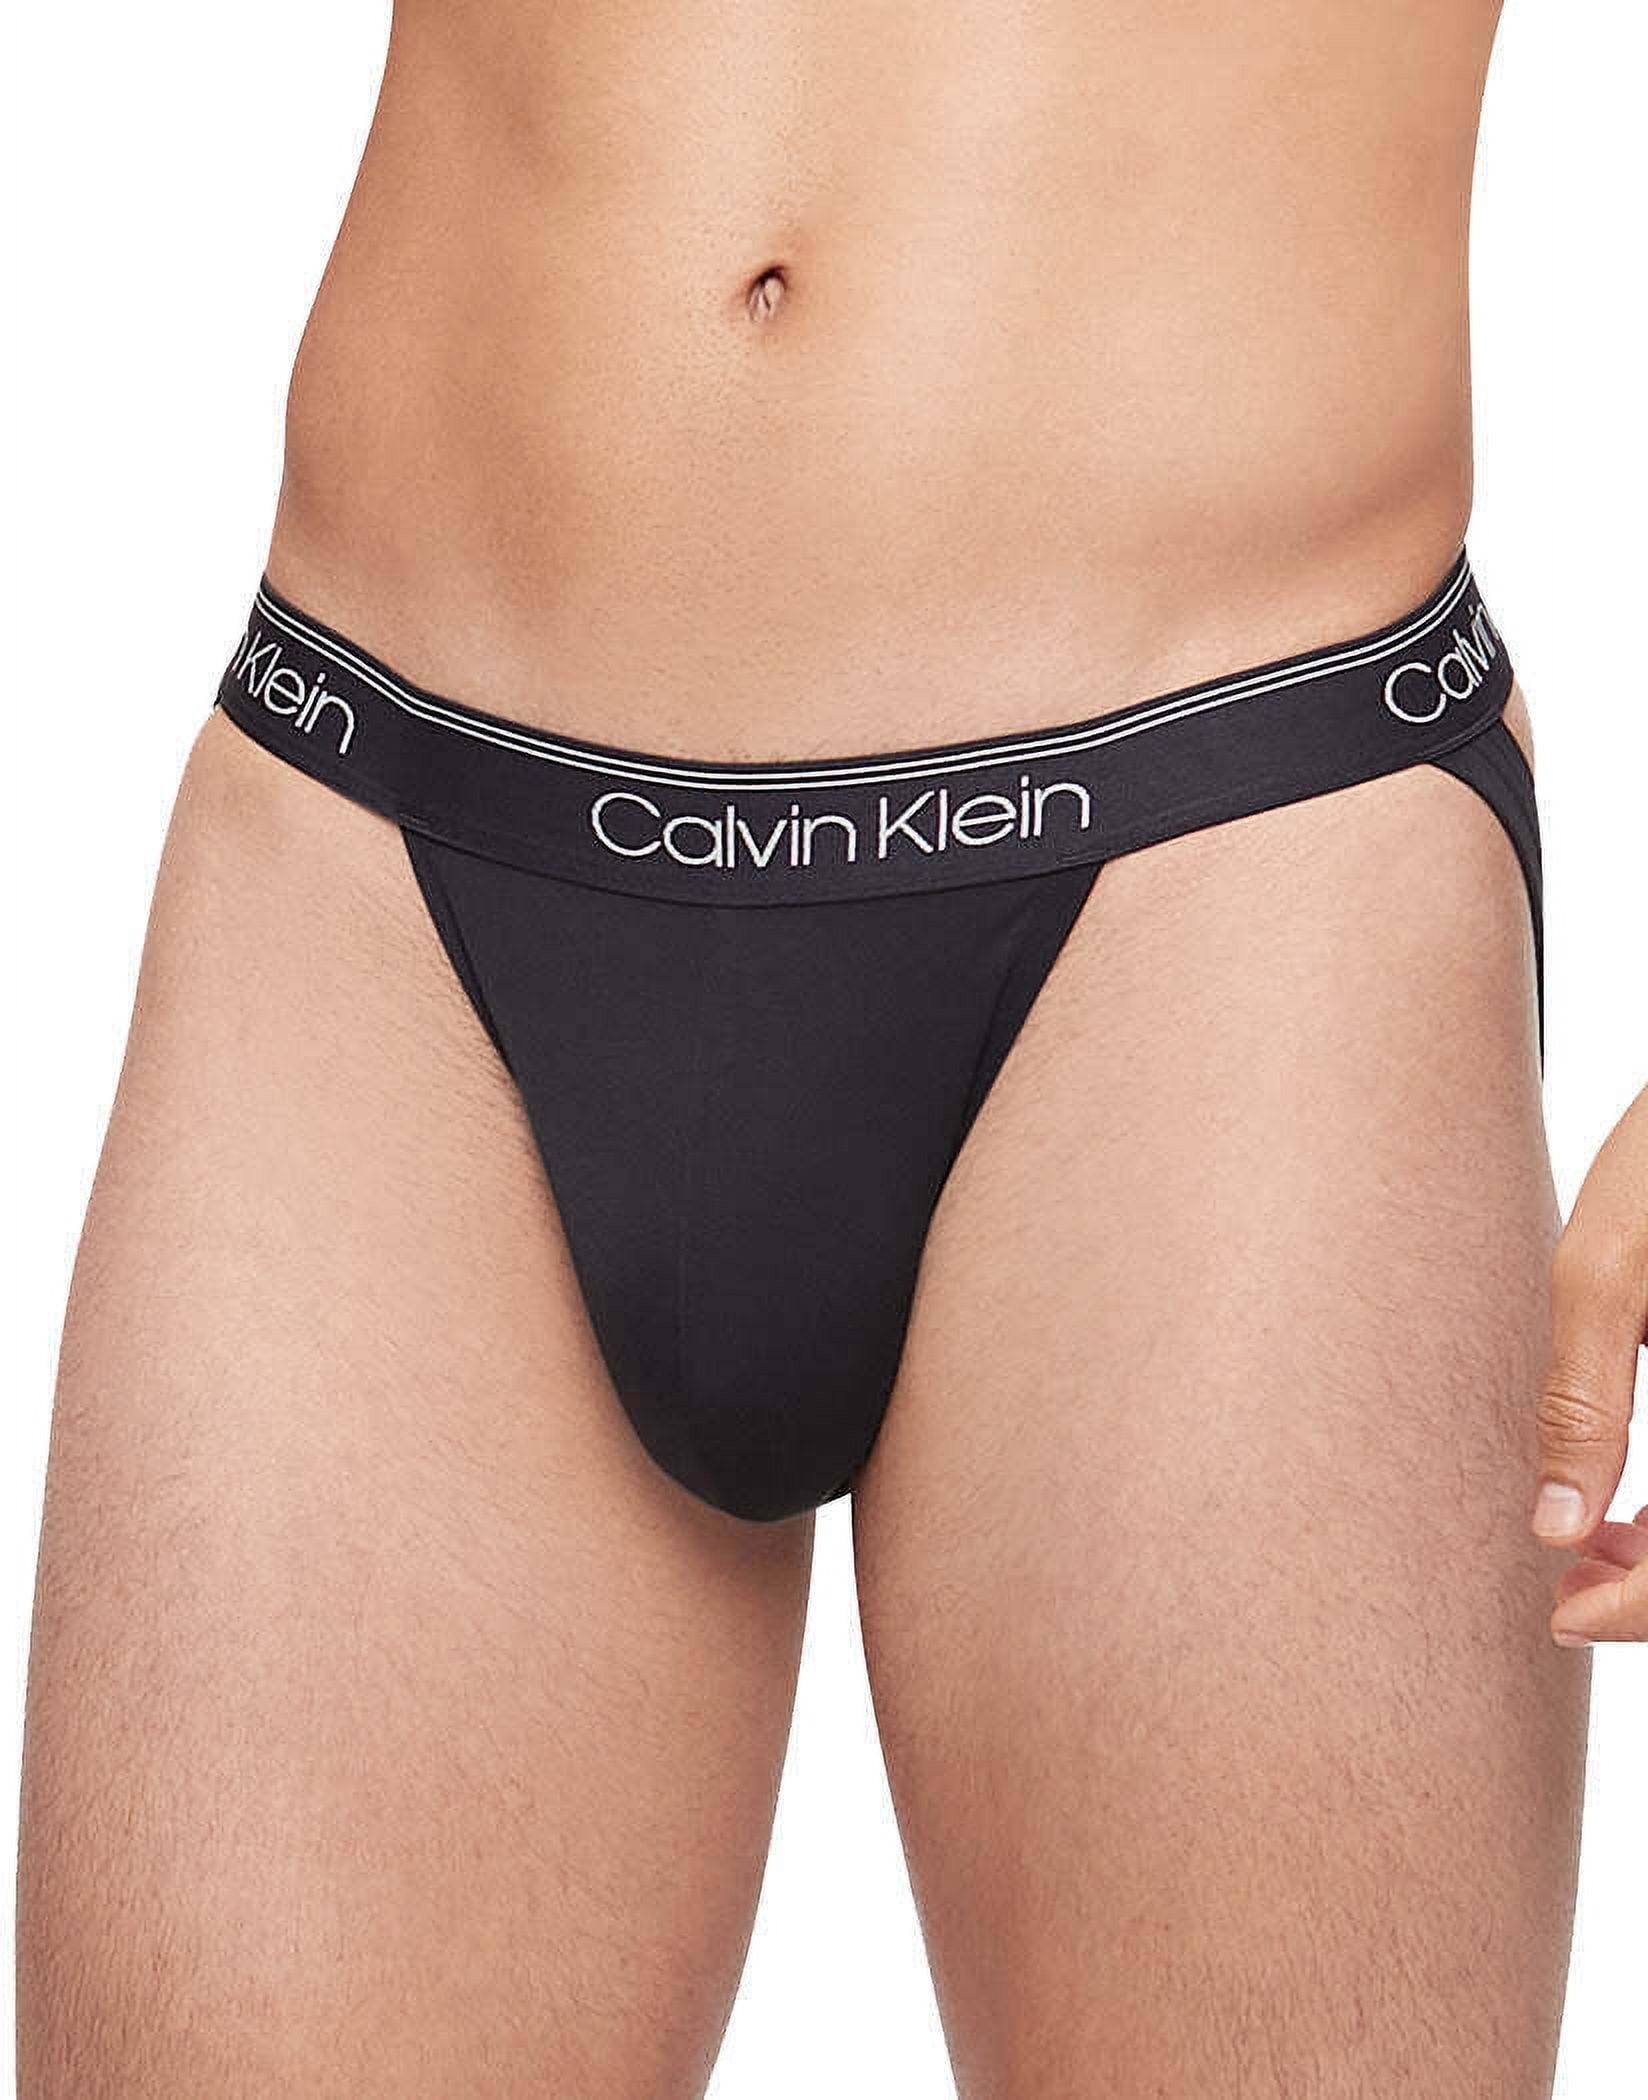 Calvin Klein 5 Pack Jock Straps - Multi